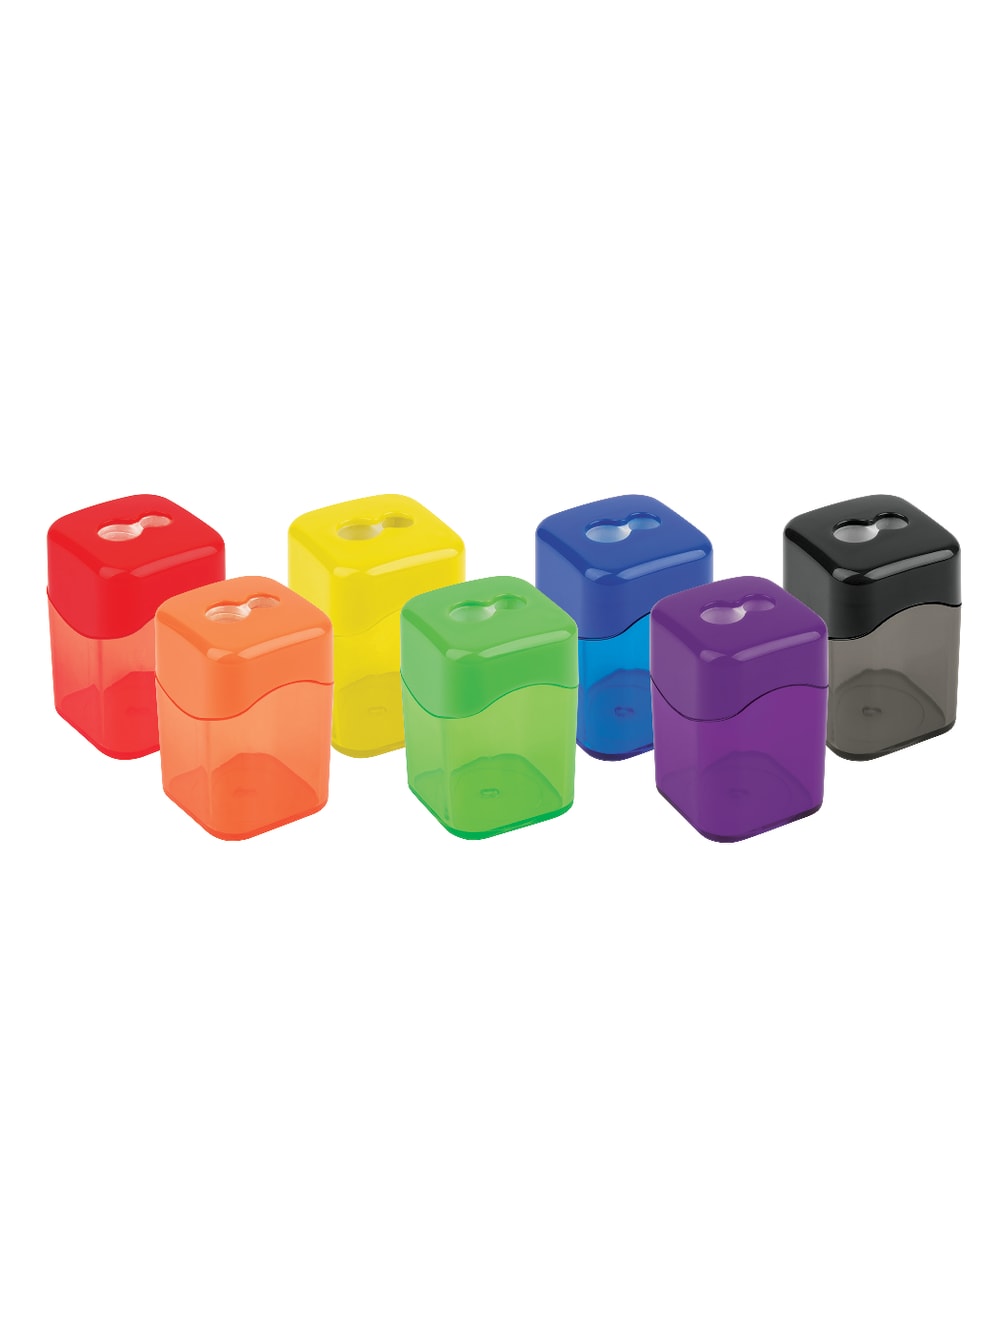 Office Depot® Brand Manual Pencil Sharpeners, Assorted Colors
				
		        		












	
			
				
				 
					Item # 
					
						
							
							
								769891